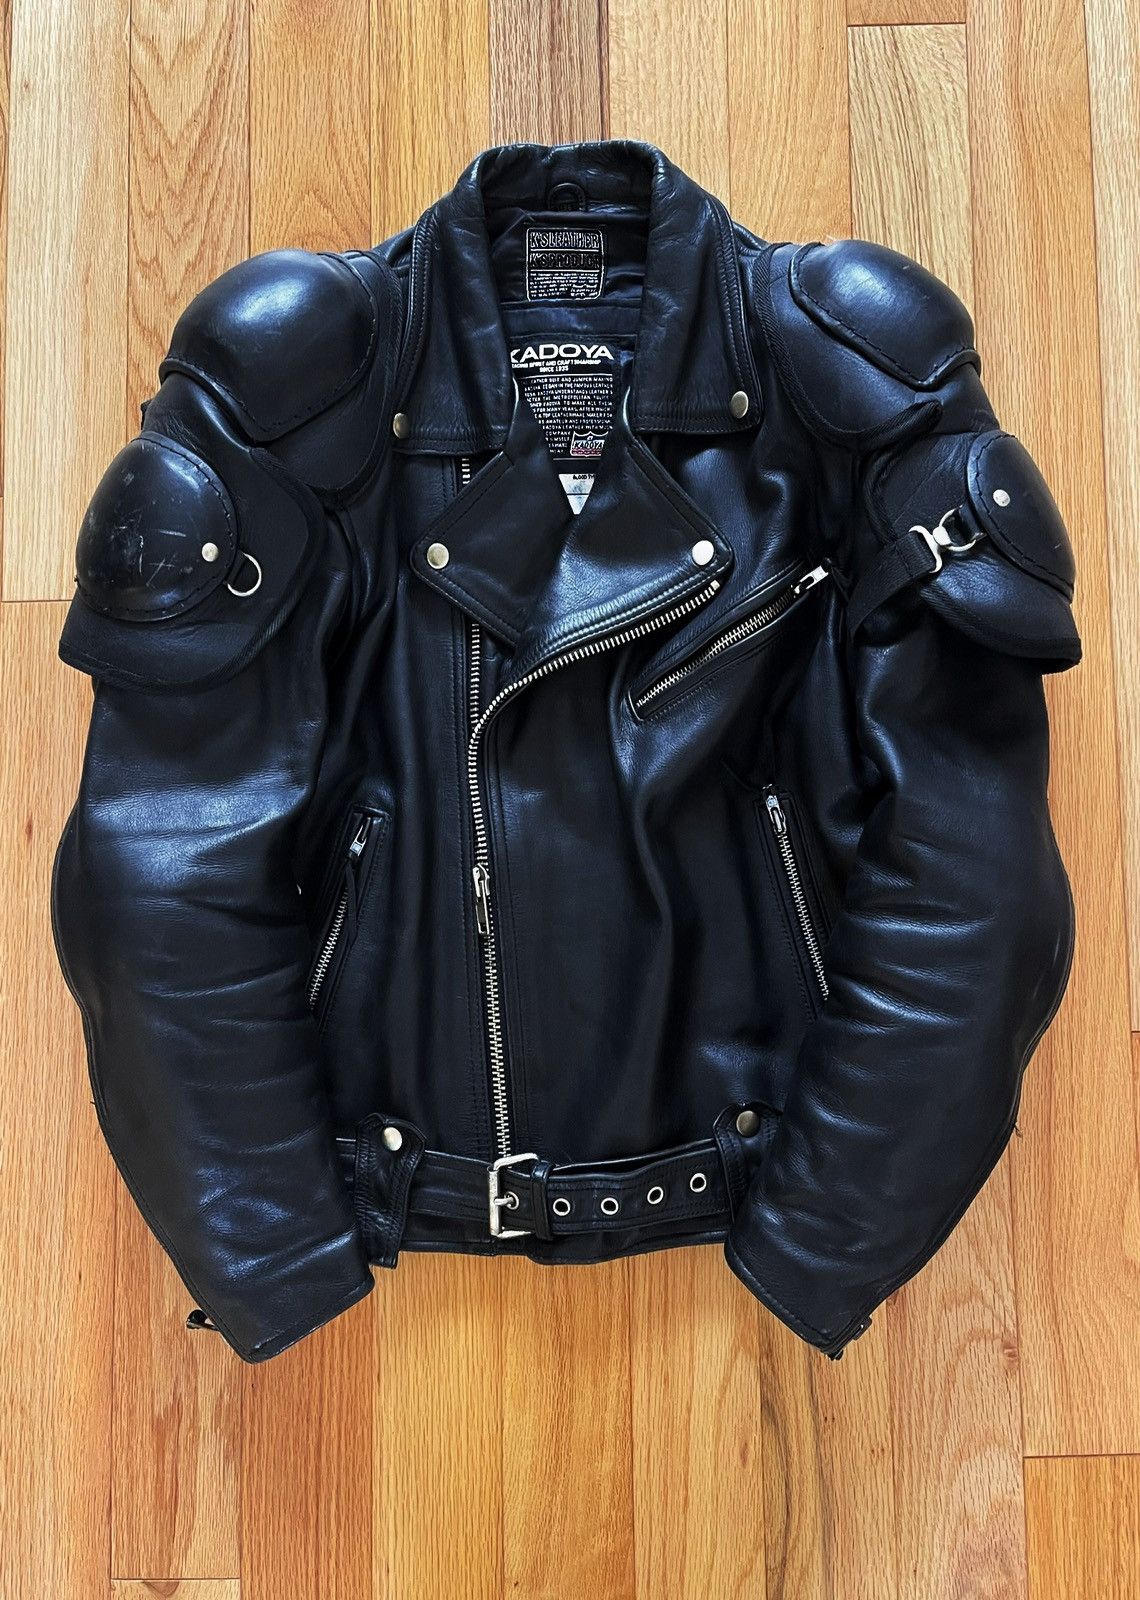 Pre-owned Kadoya ‘battlesuit' Armored Black Leather Biker Jacket